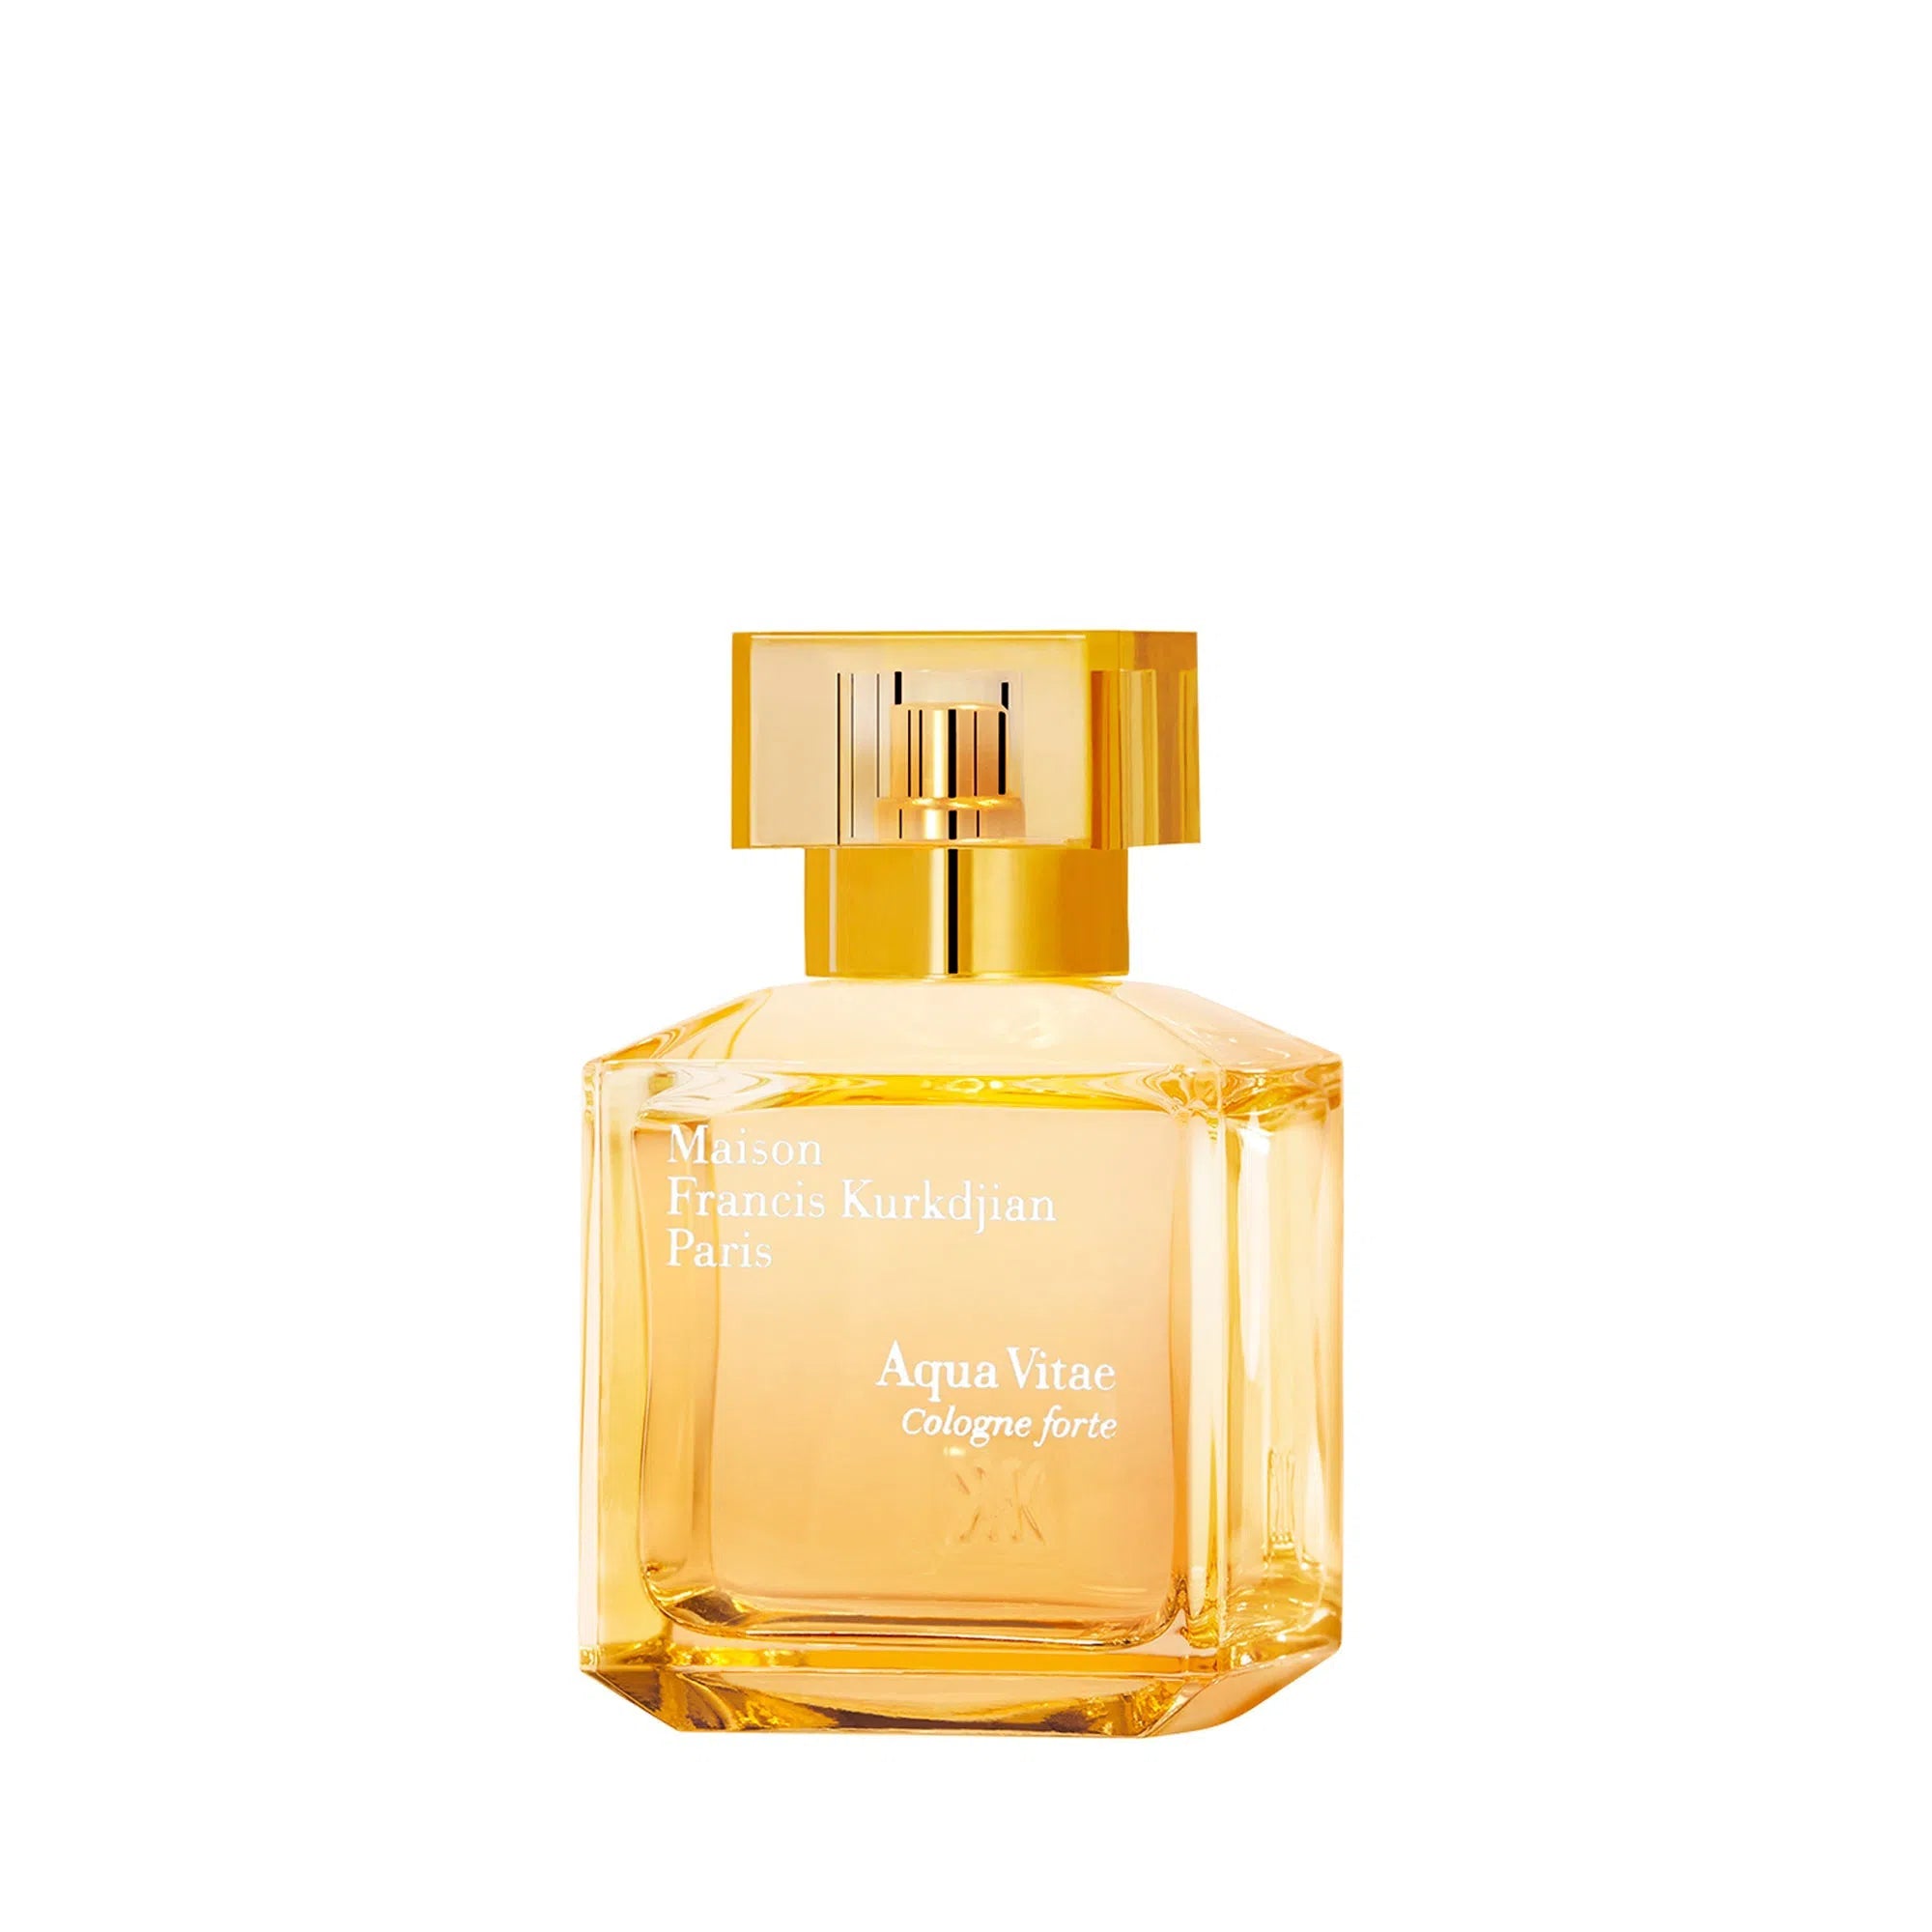 Perfume Maison Francis Kurkdjian Paris Aqua Vitae Cologne Forte EDP (U) / 70 ml - 3700559611029- Prive Perfumes Honduras